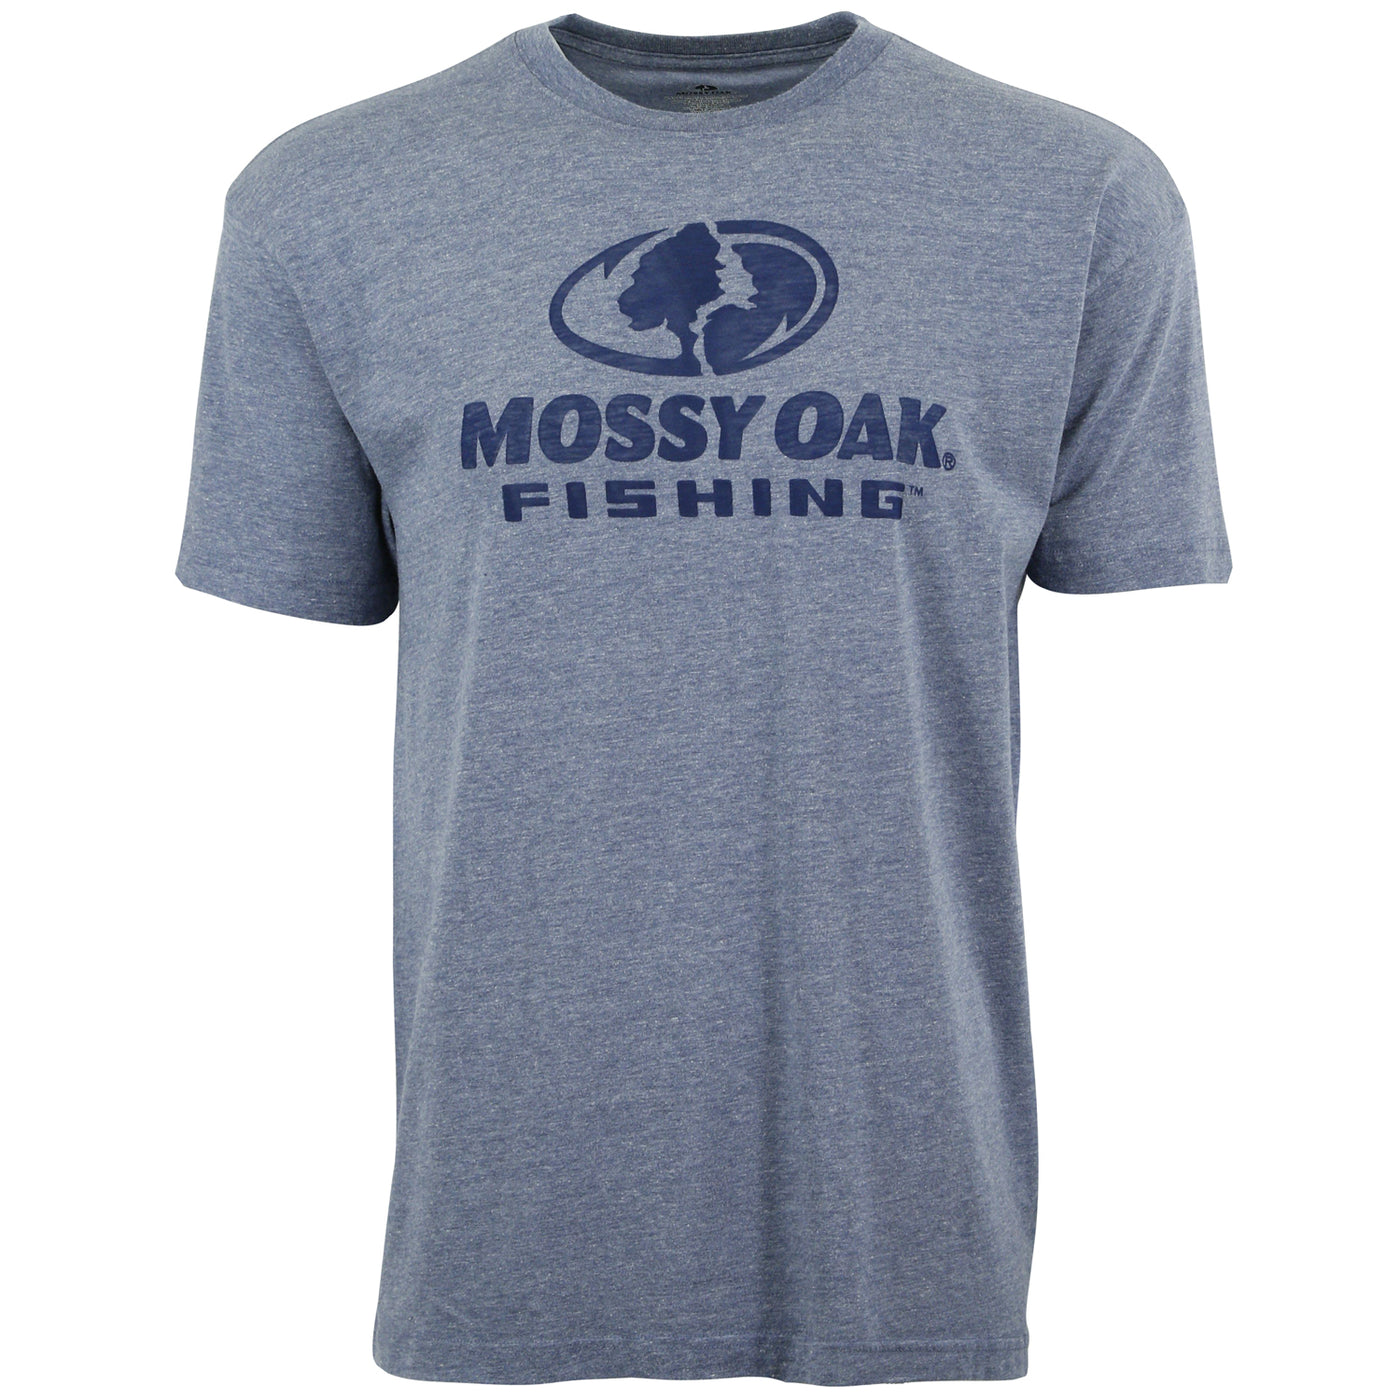 Mossy Oak Fishing Burnout Logo Short Sleeve Tee Navy